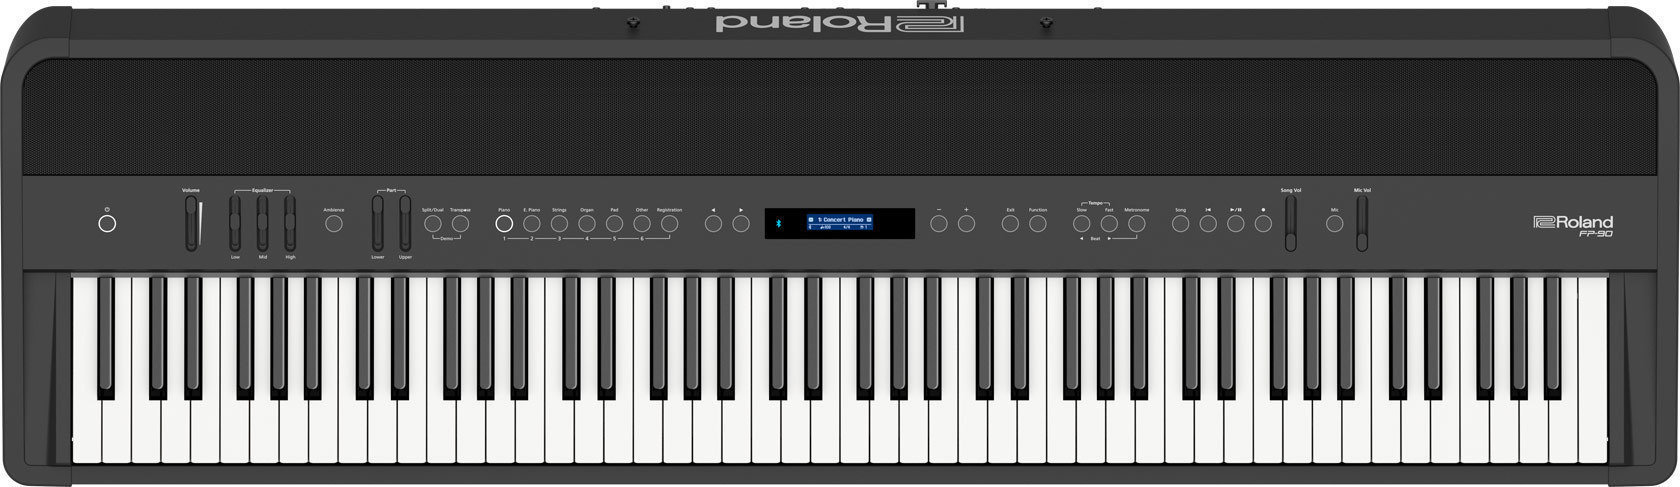 Digital Stage Piano Roland FP-90 BK Digital Stage Piano